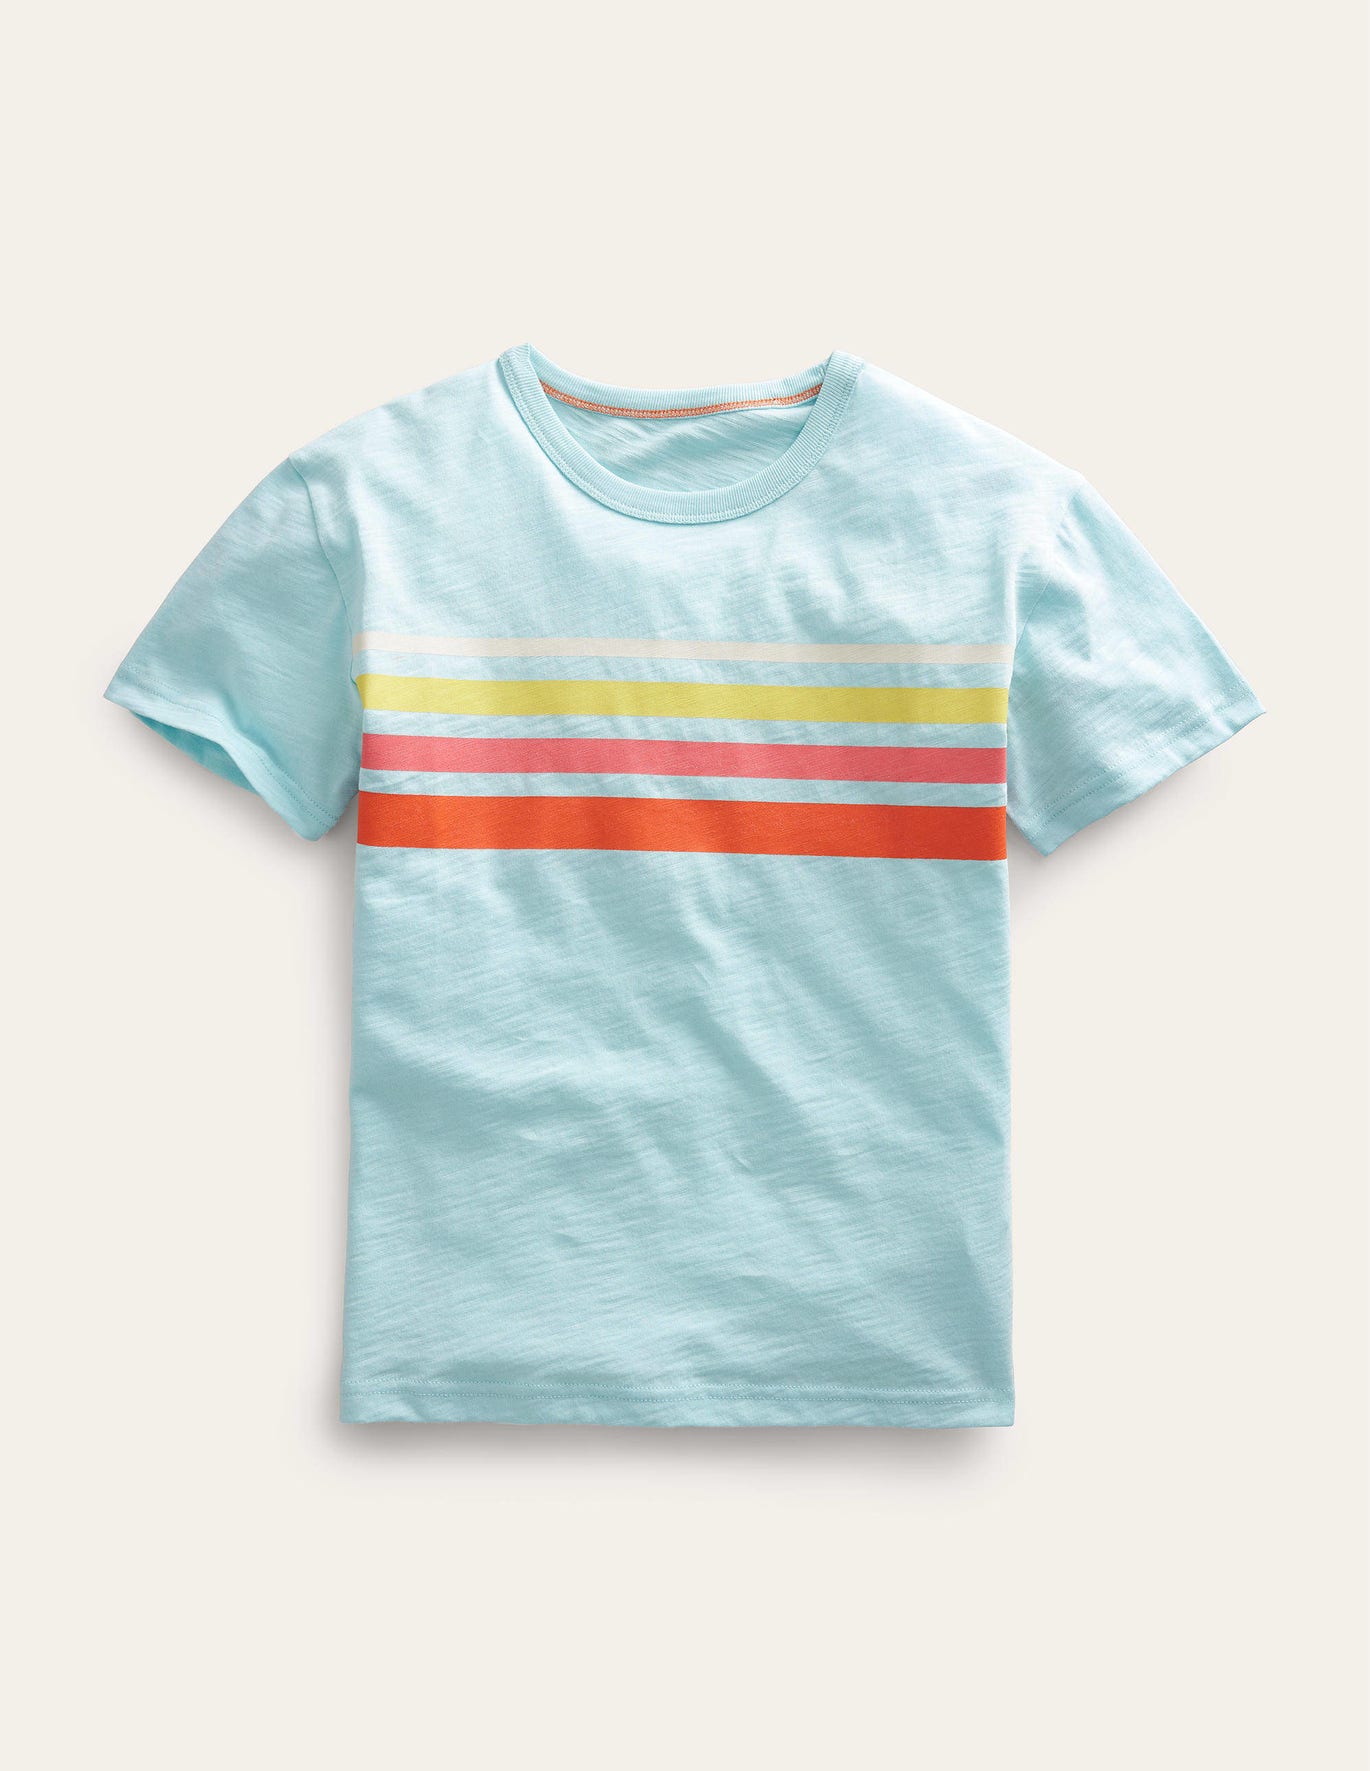 Boden Relaxed Chest Stripe T-shirt - Iced Aqua Blue